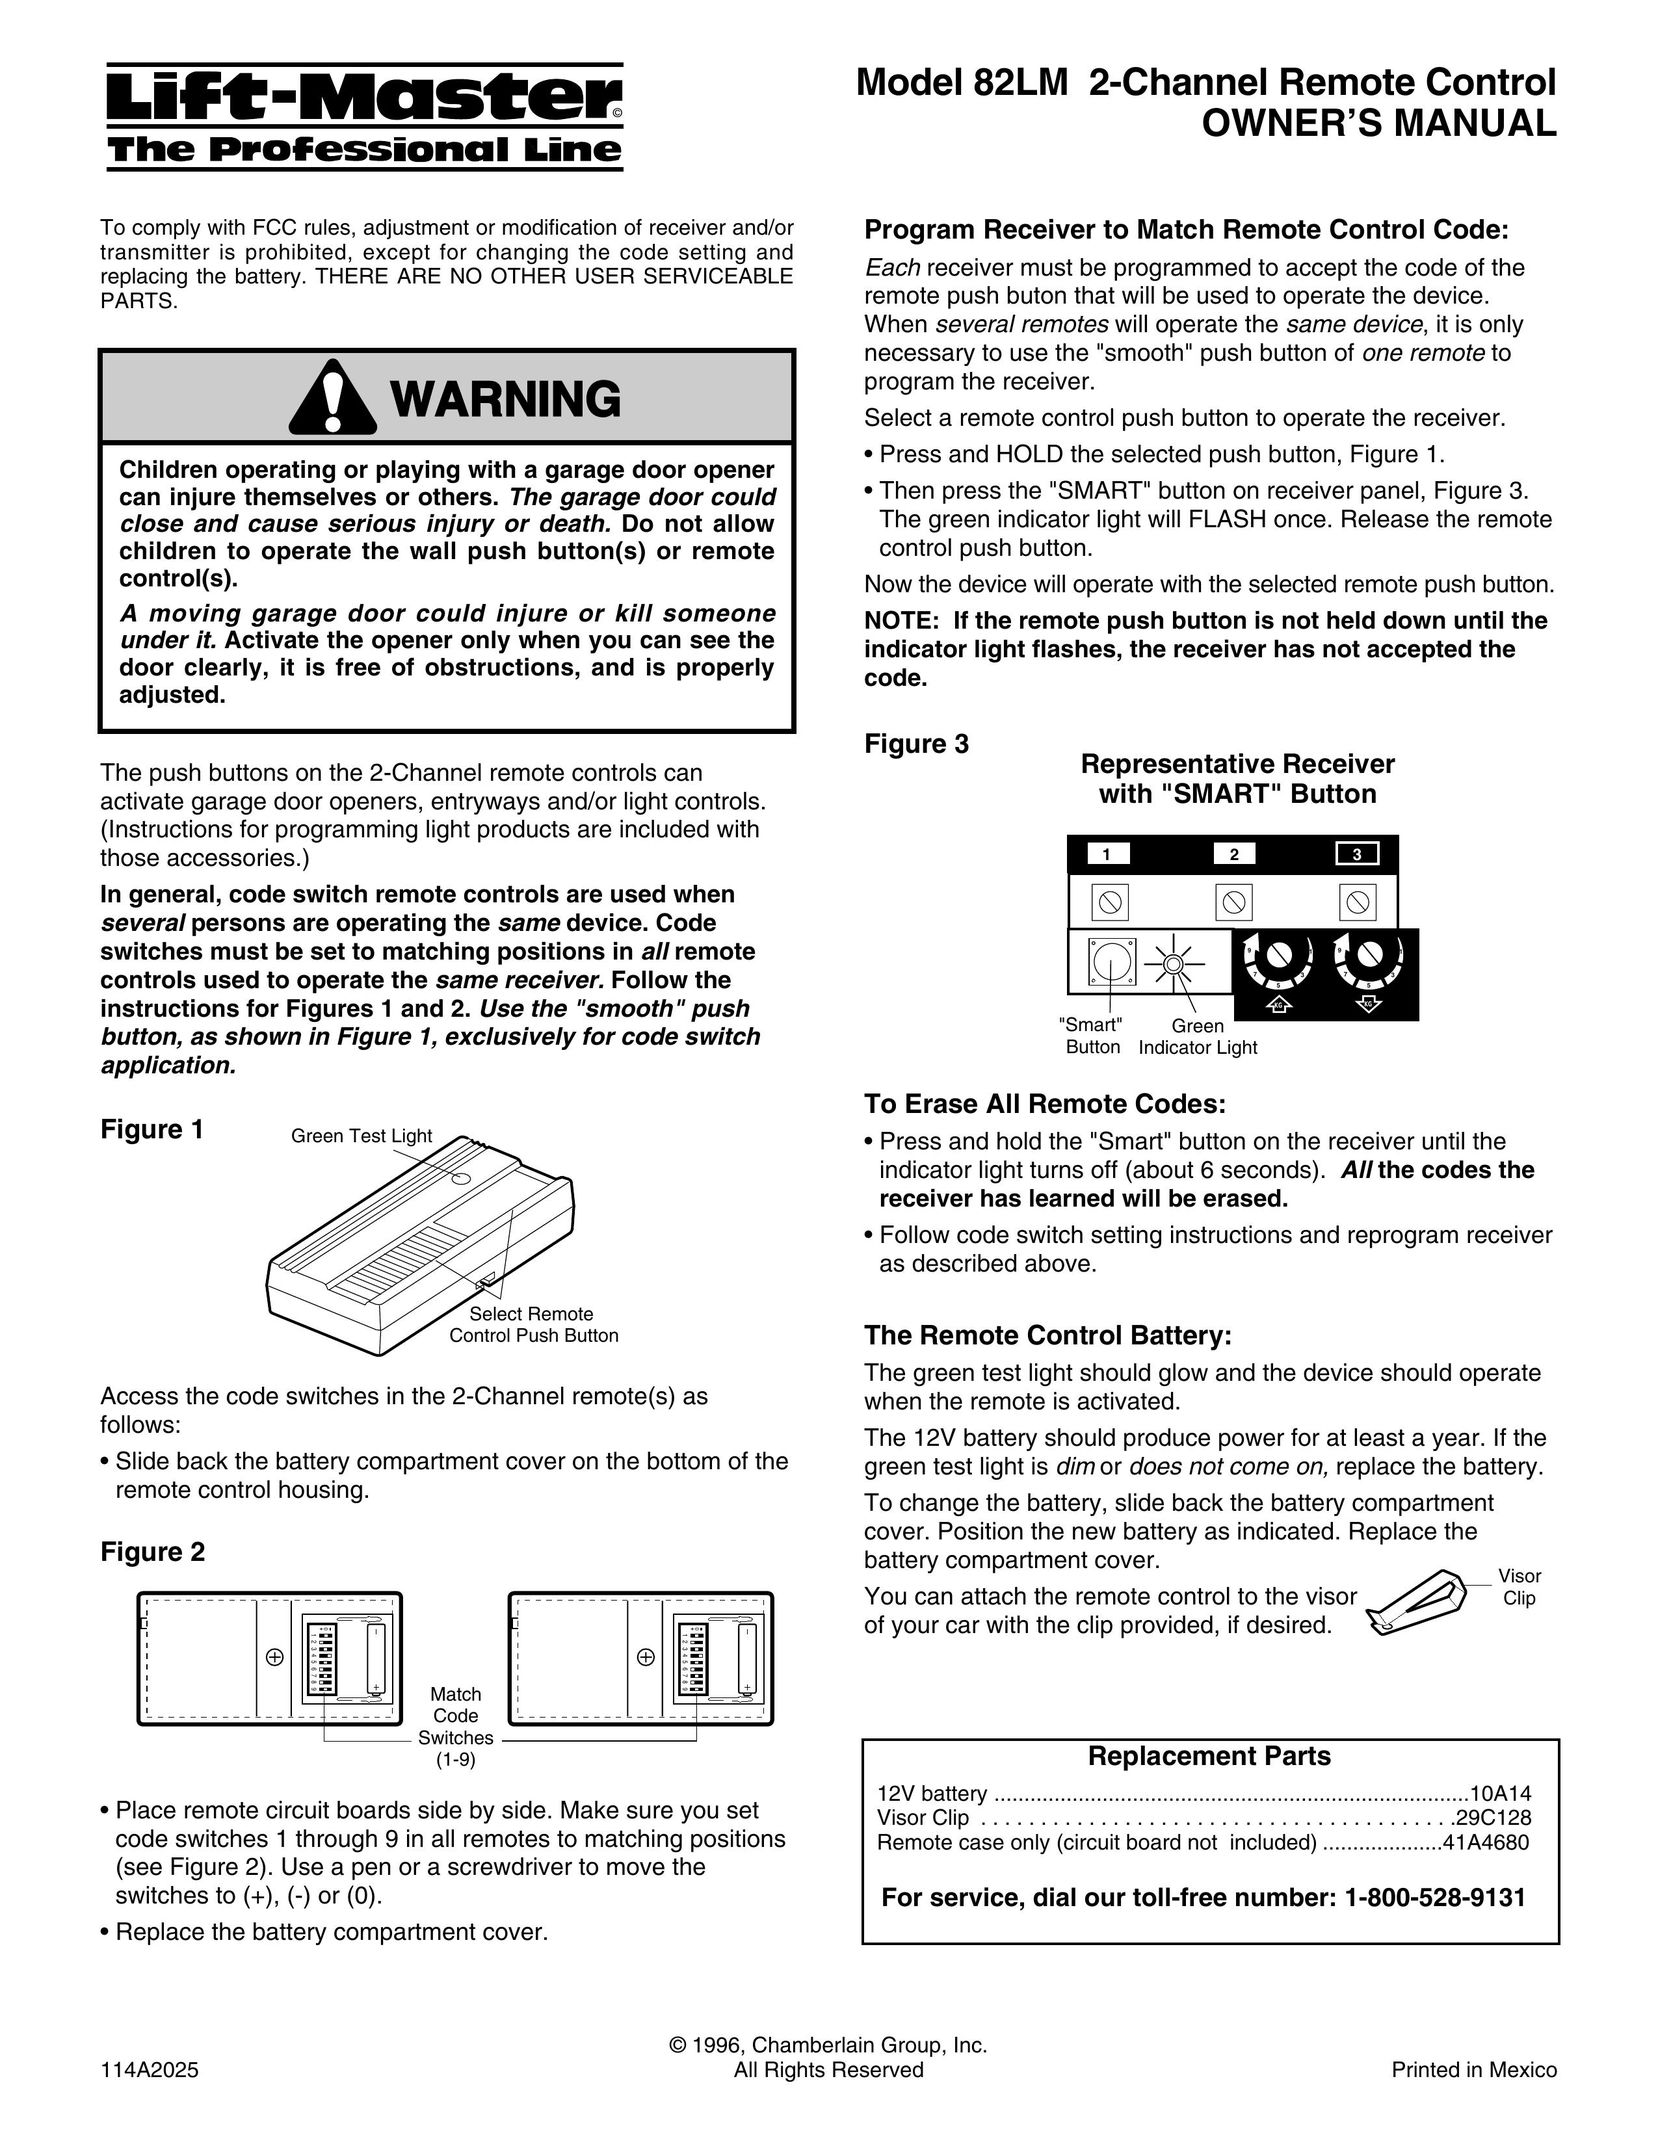 Chamberlain 82LM Universal Remote User Manual